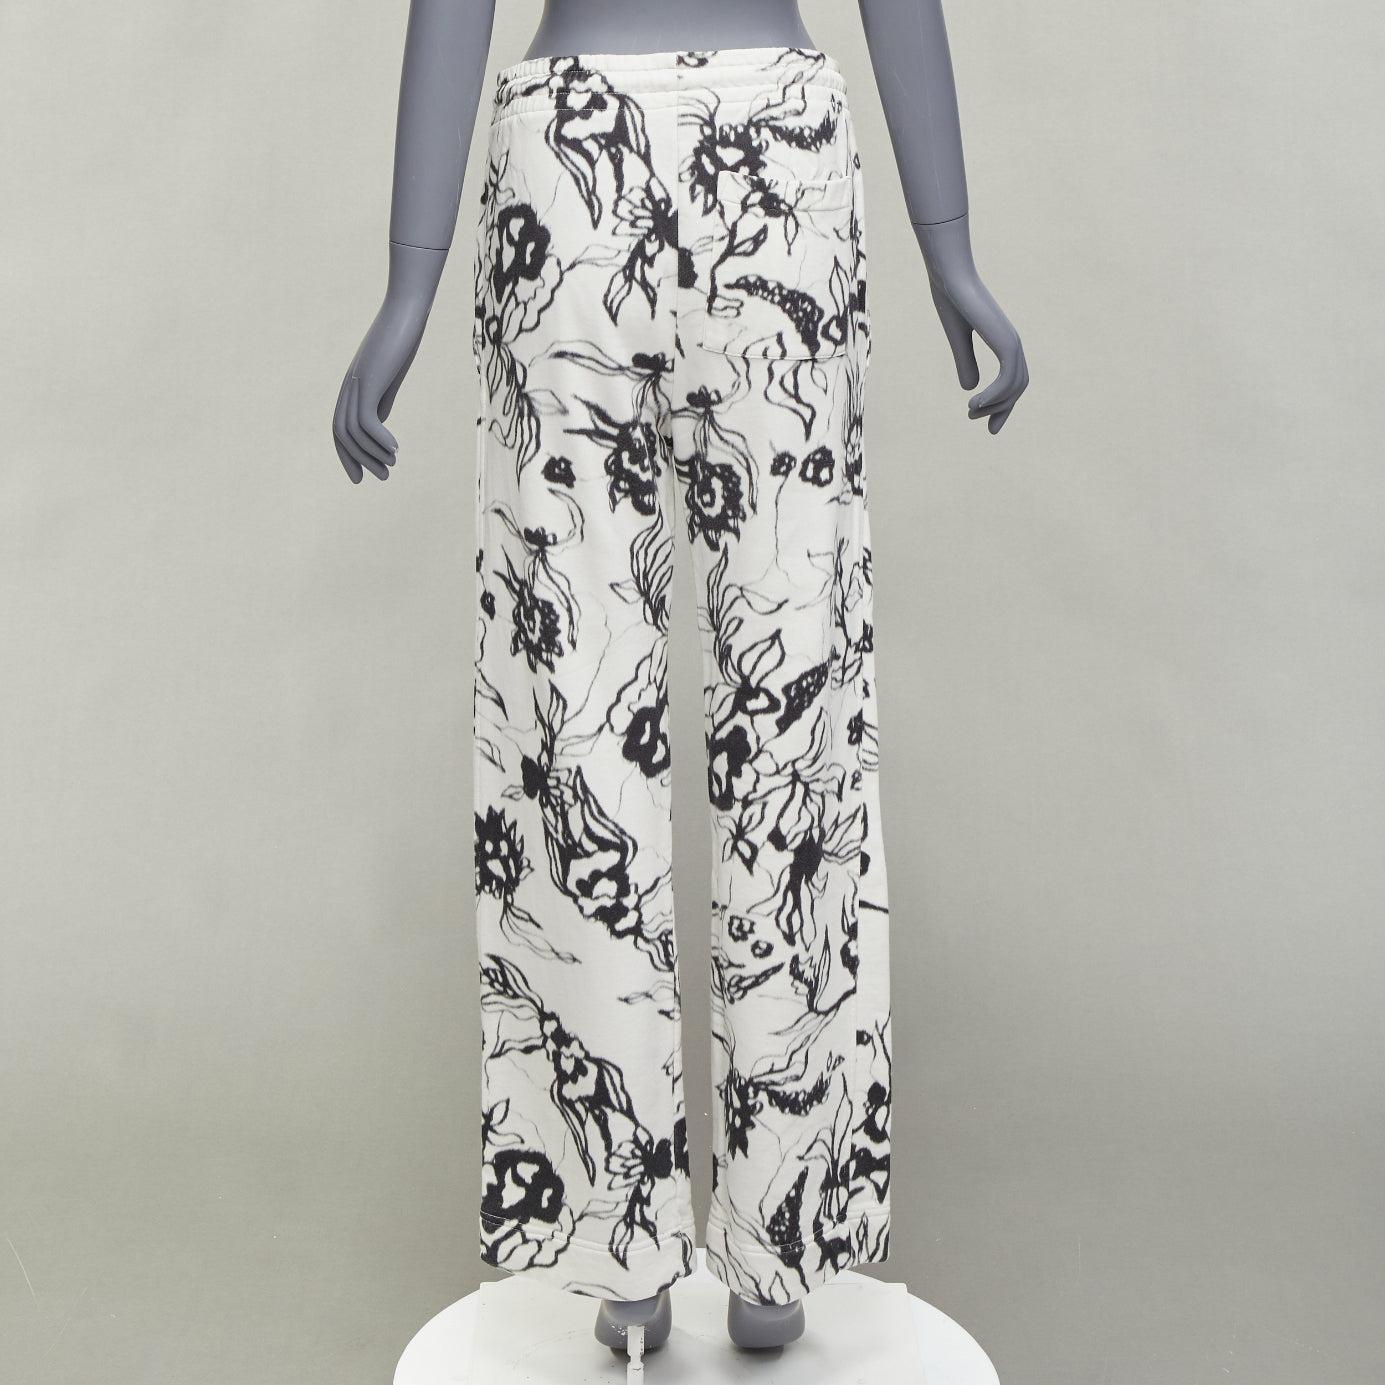 DRIES VAN NOTEN black white cotton blurry abstract floral print sweatpants S For Sale 1